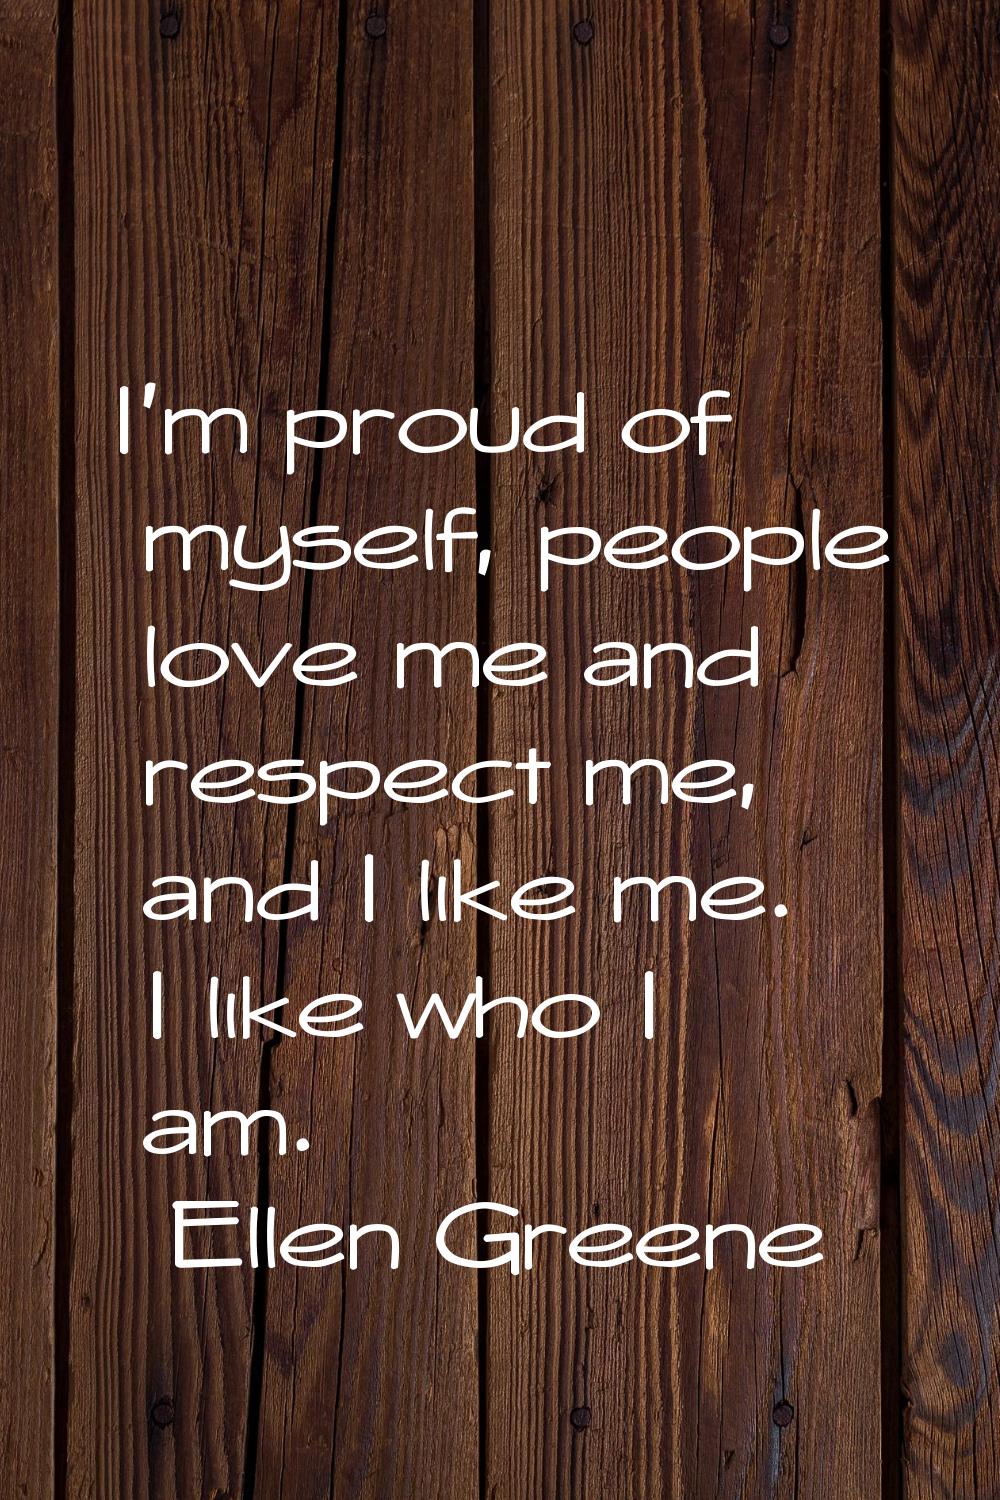 I'm proud of myself, people love me and respect me, and I like me. I like who I am.